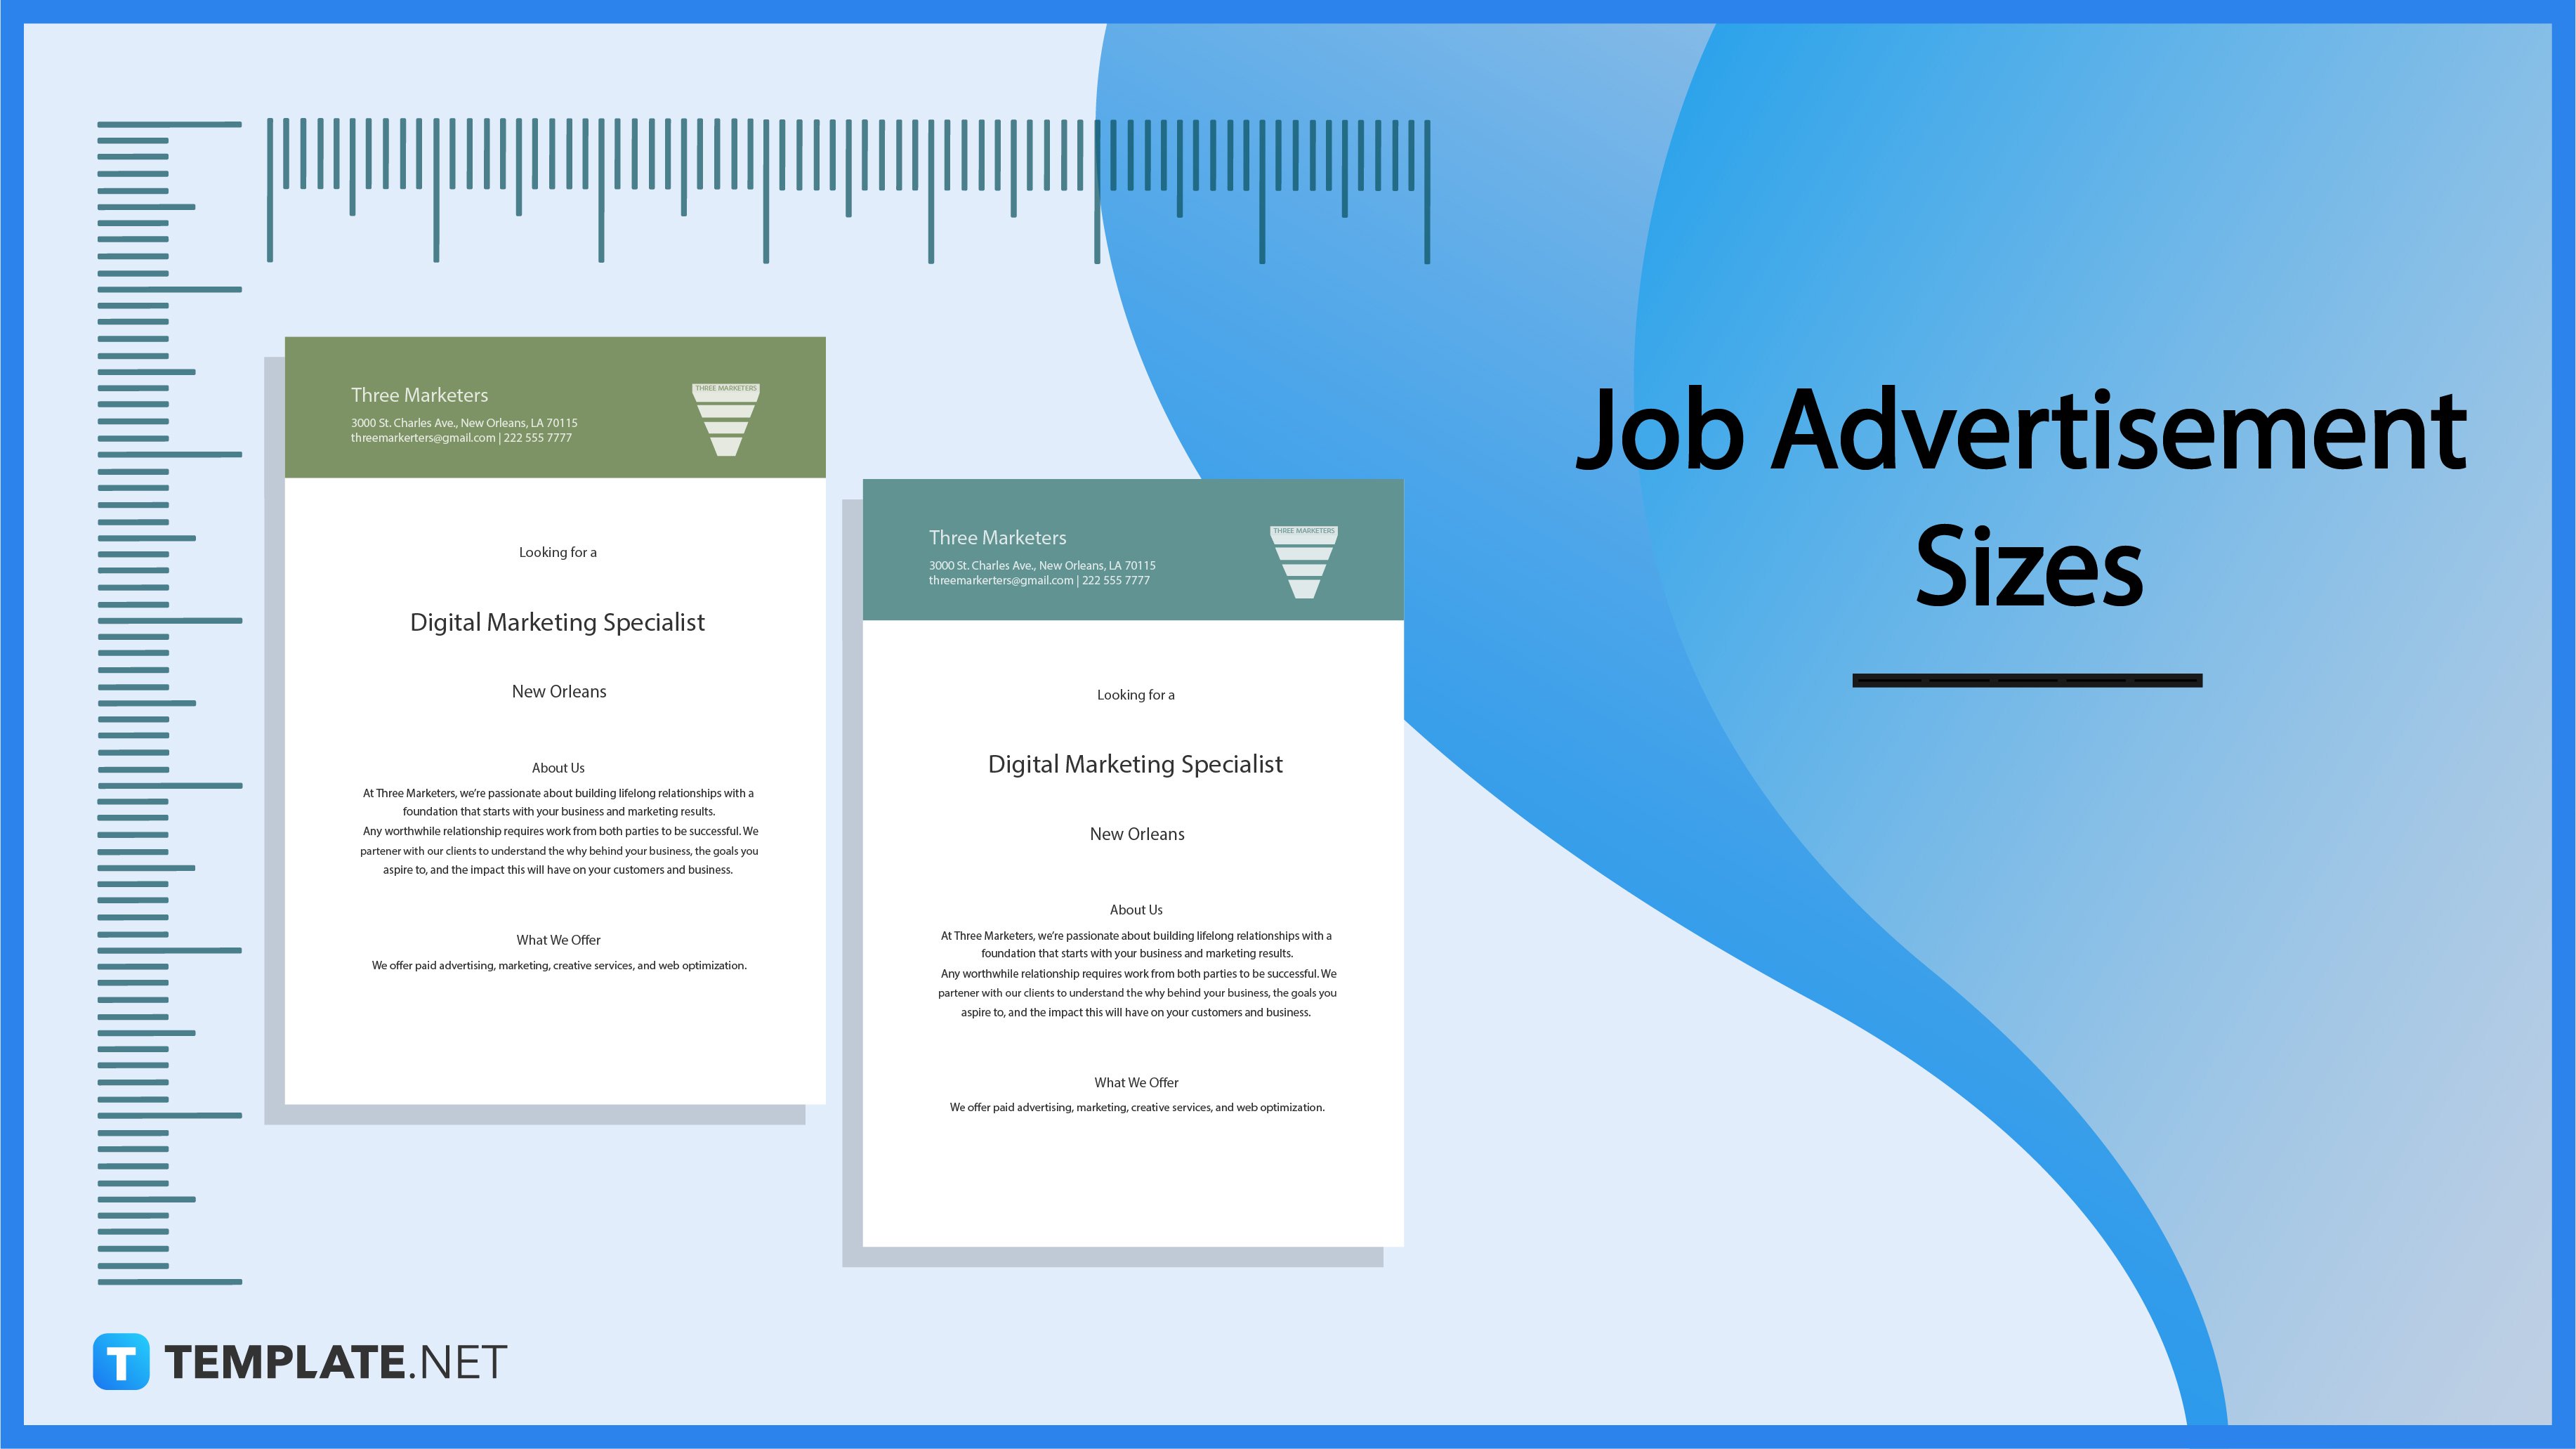 Premium Vector  Job vacancy design hiring poster template looking for  talents advertising open recruitment creati